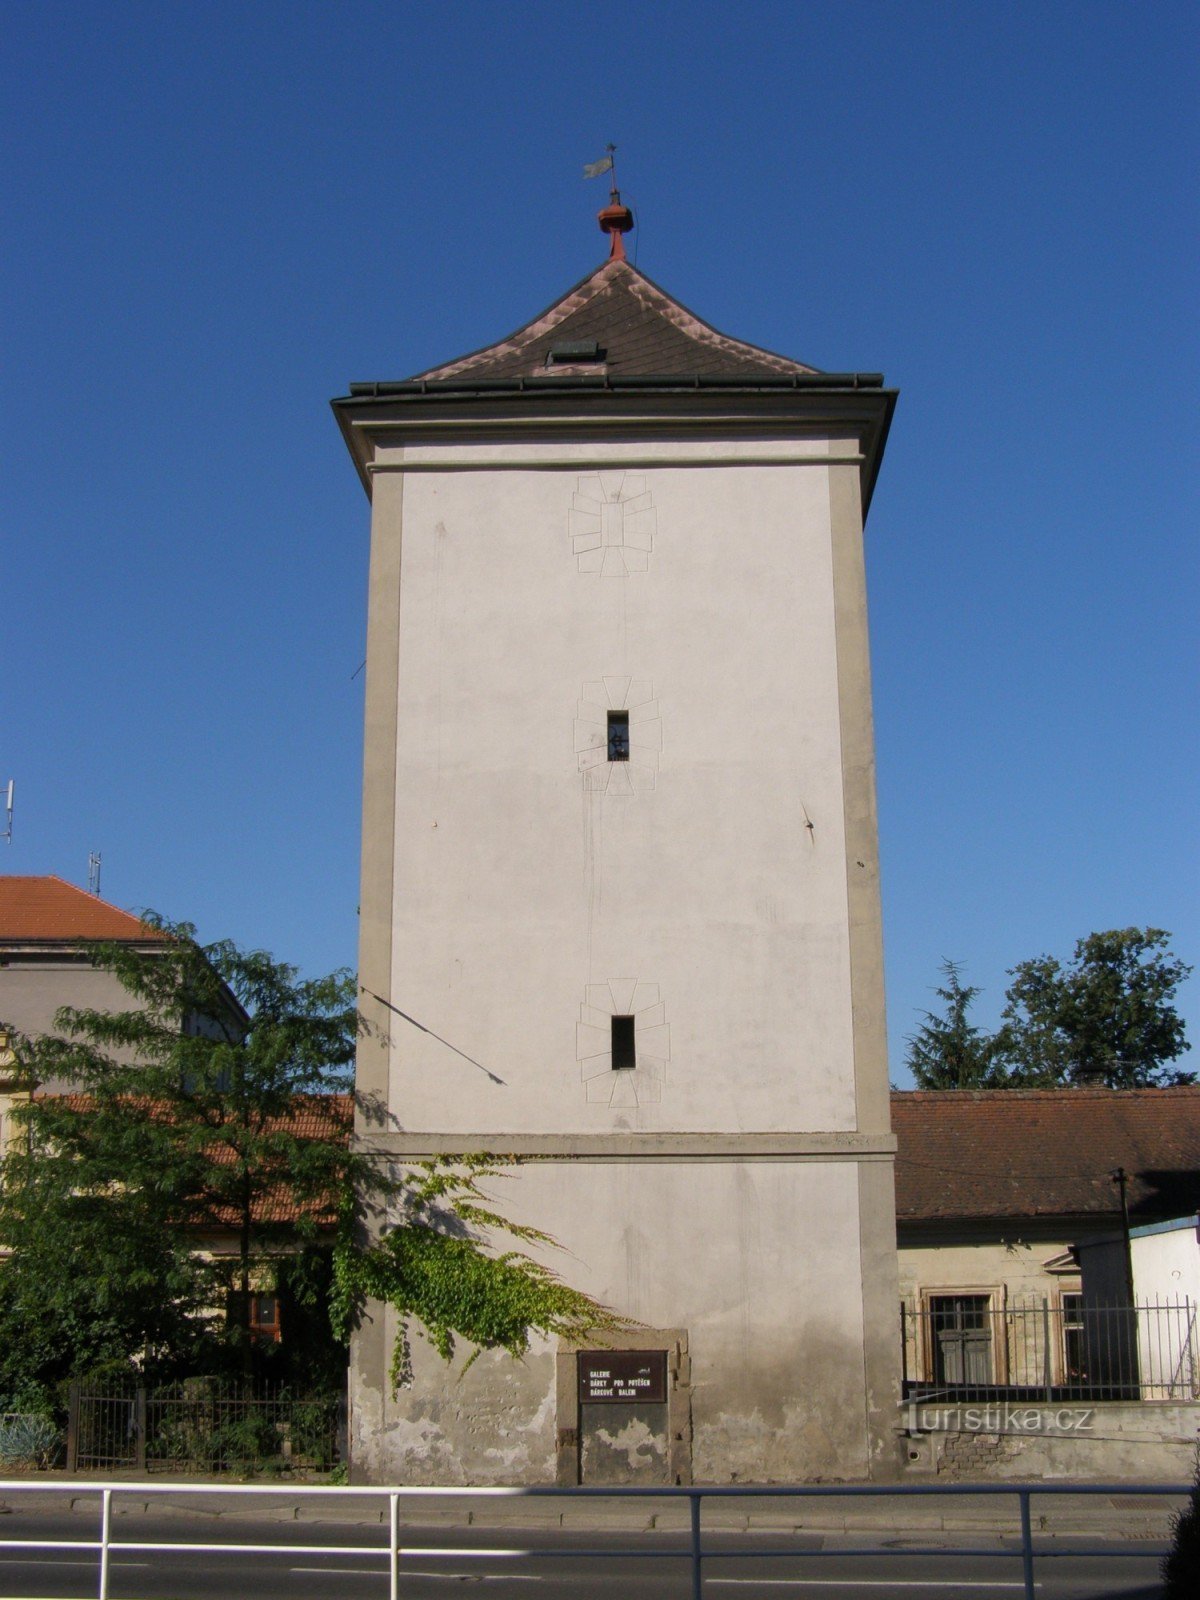 Jičín - водонапірна вежа, Galerie Na hrázi